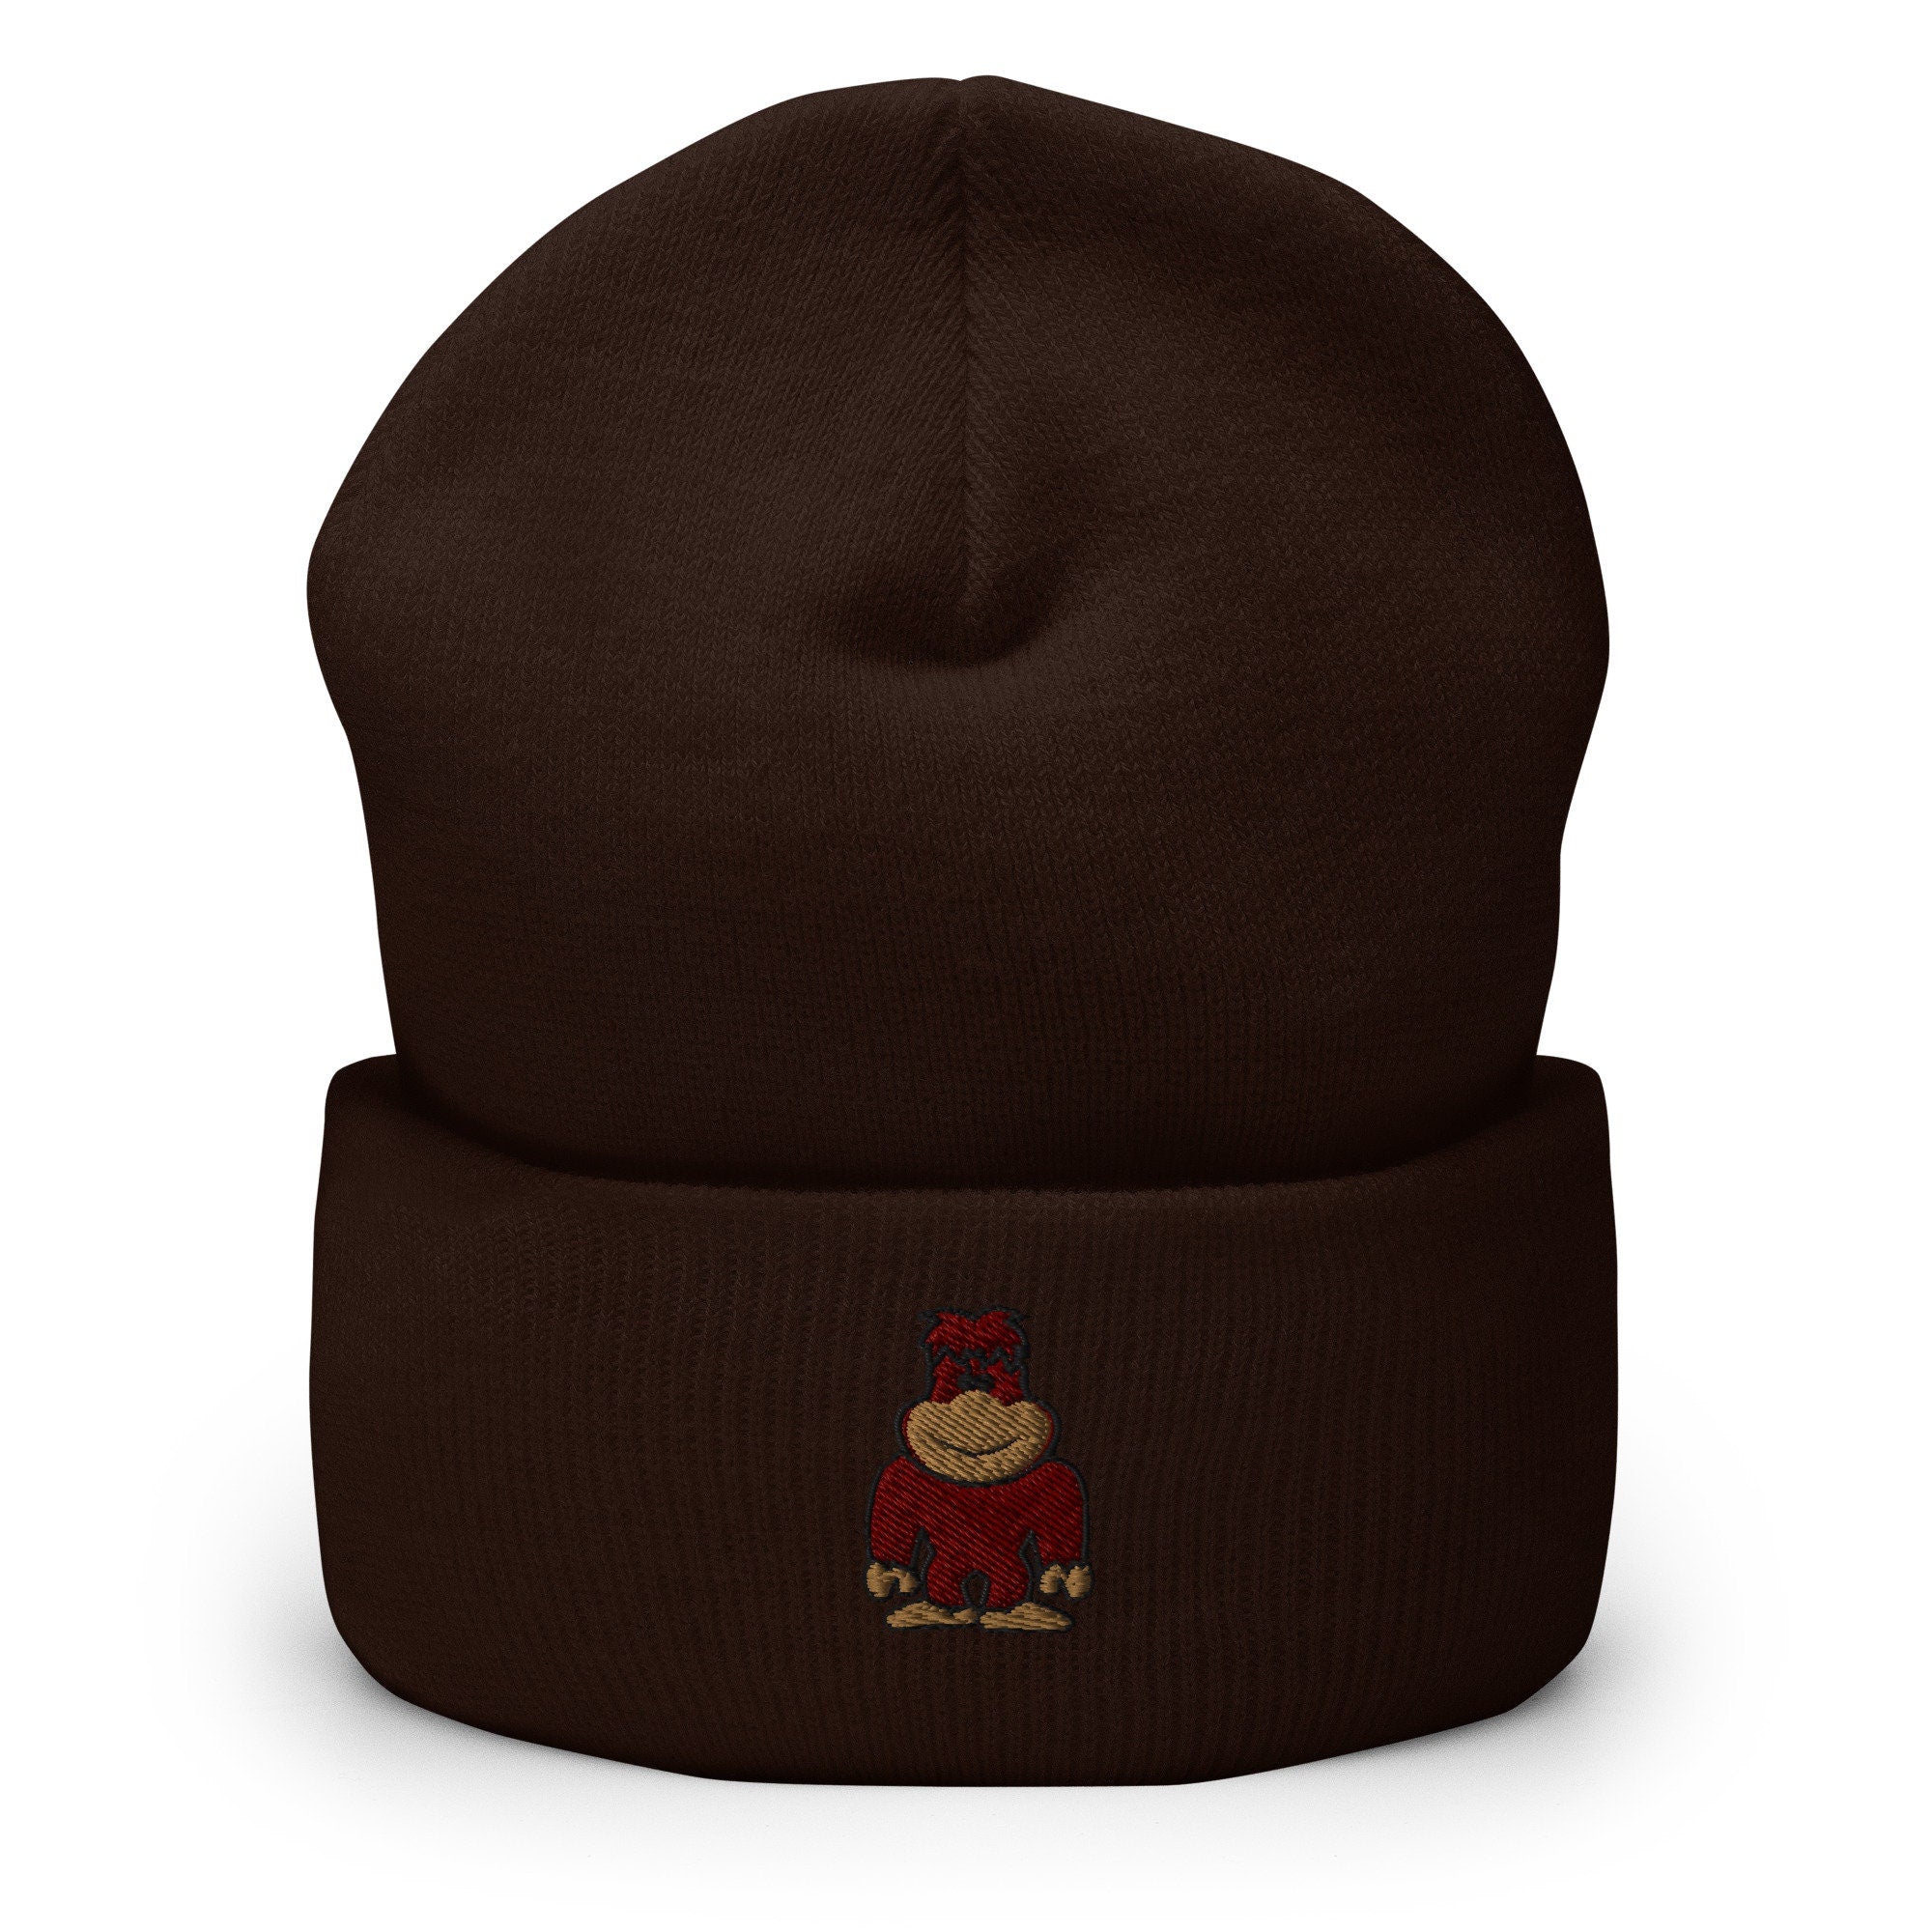 Sasquatch, Bigfoot Embroidered Beanie, Handmade Cuffed Knit Unisex Slouchy Adult Winter Hat Cap Gift